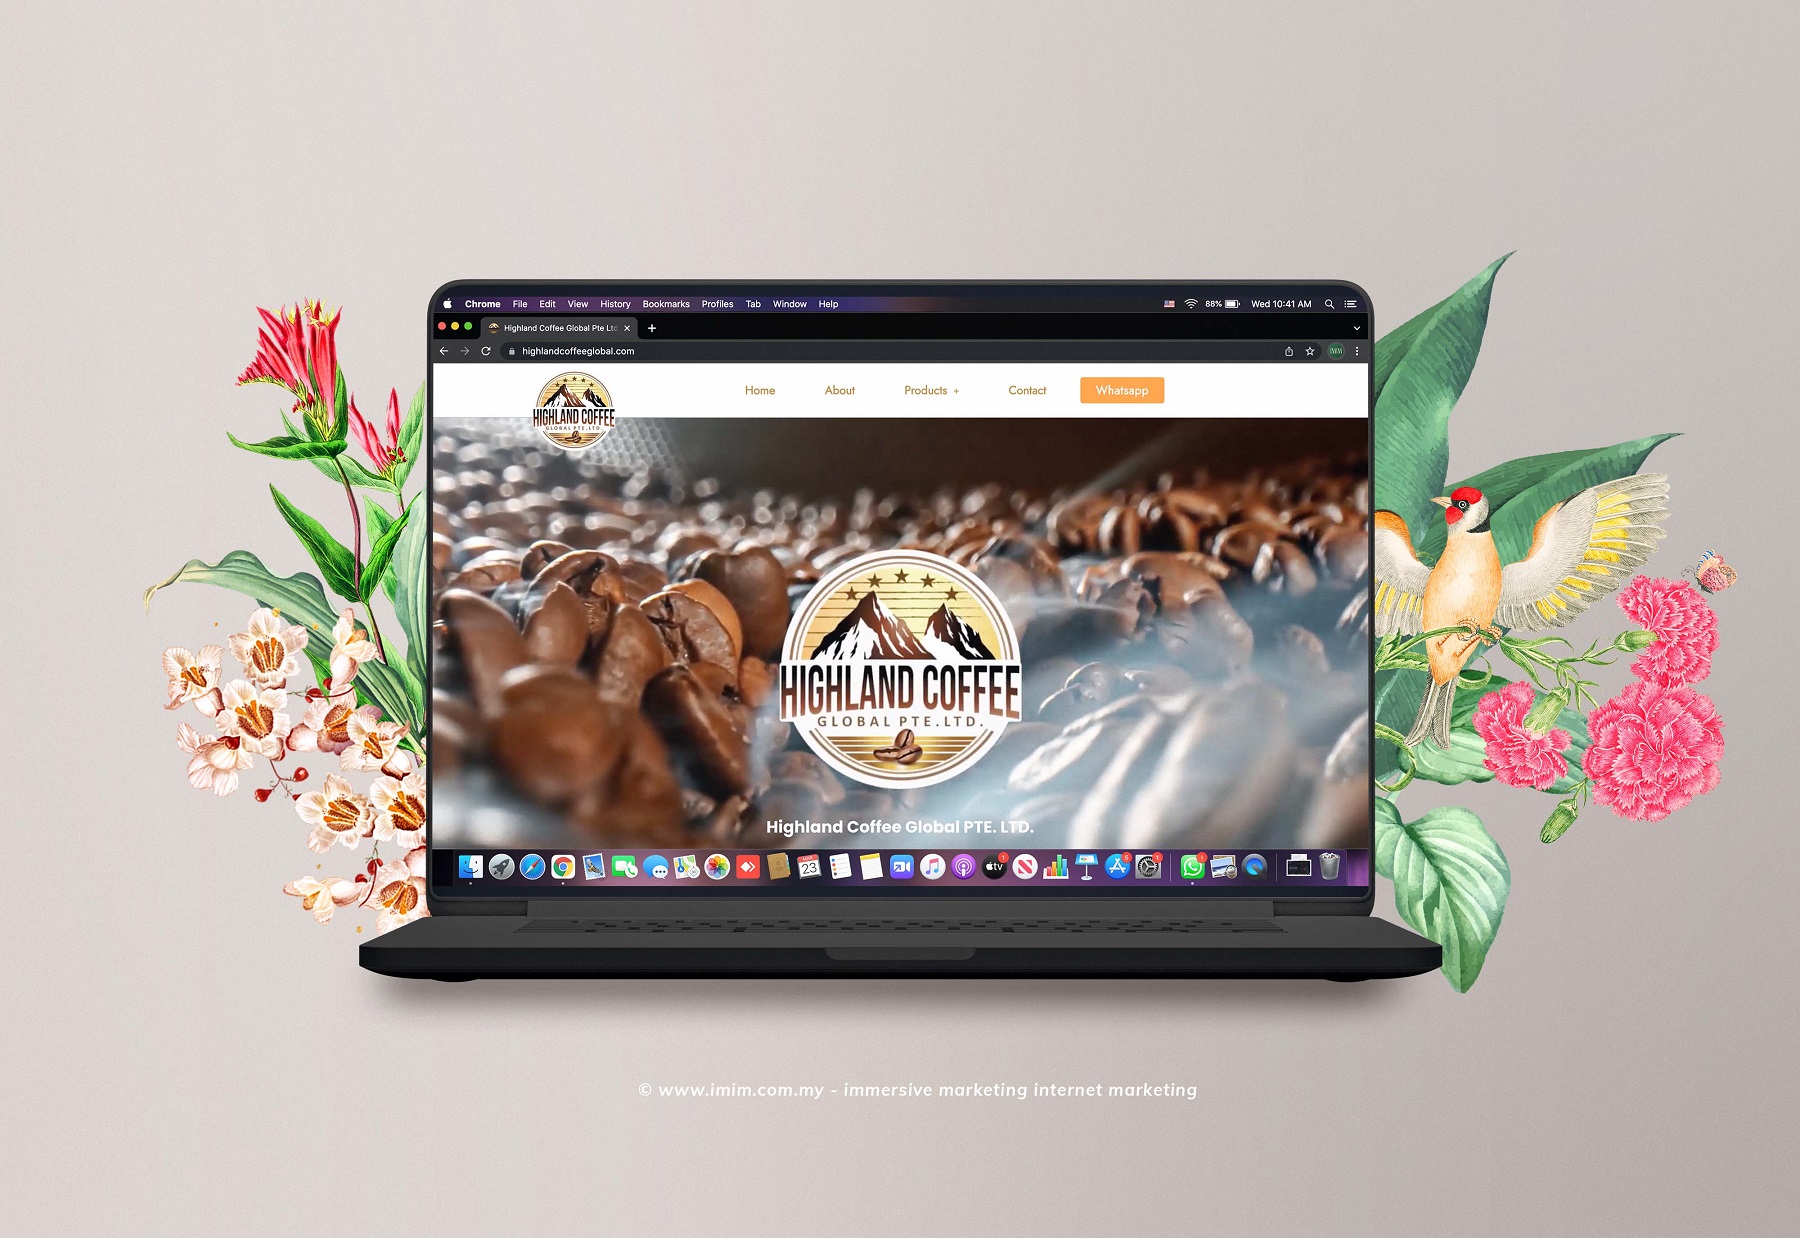 Highland Coffee Web Design Portfolio a mockup screen from website designer in Pj Malaysia by IMIM